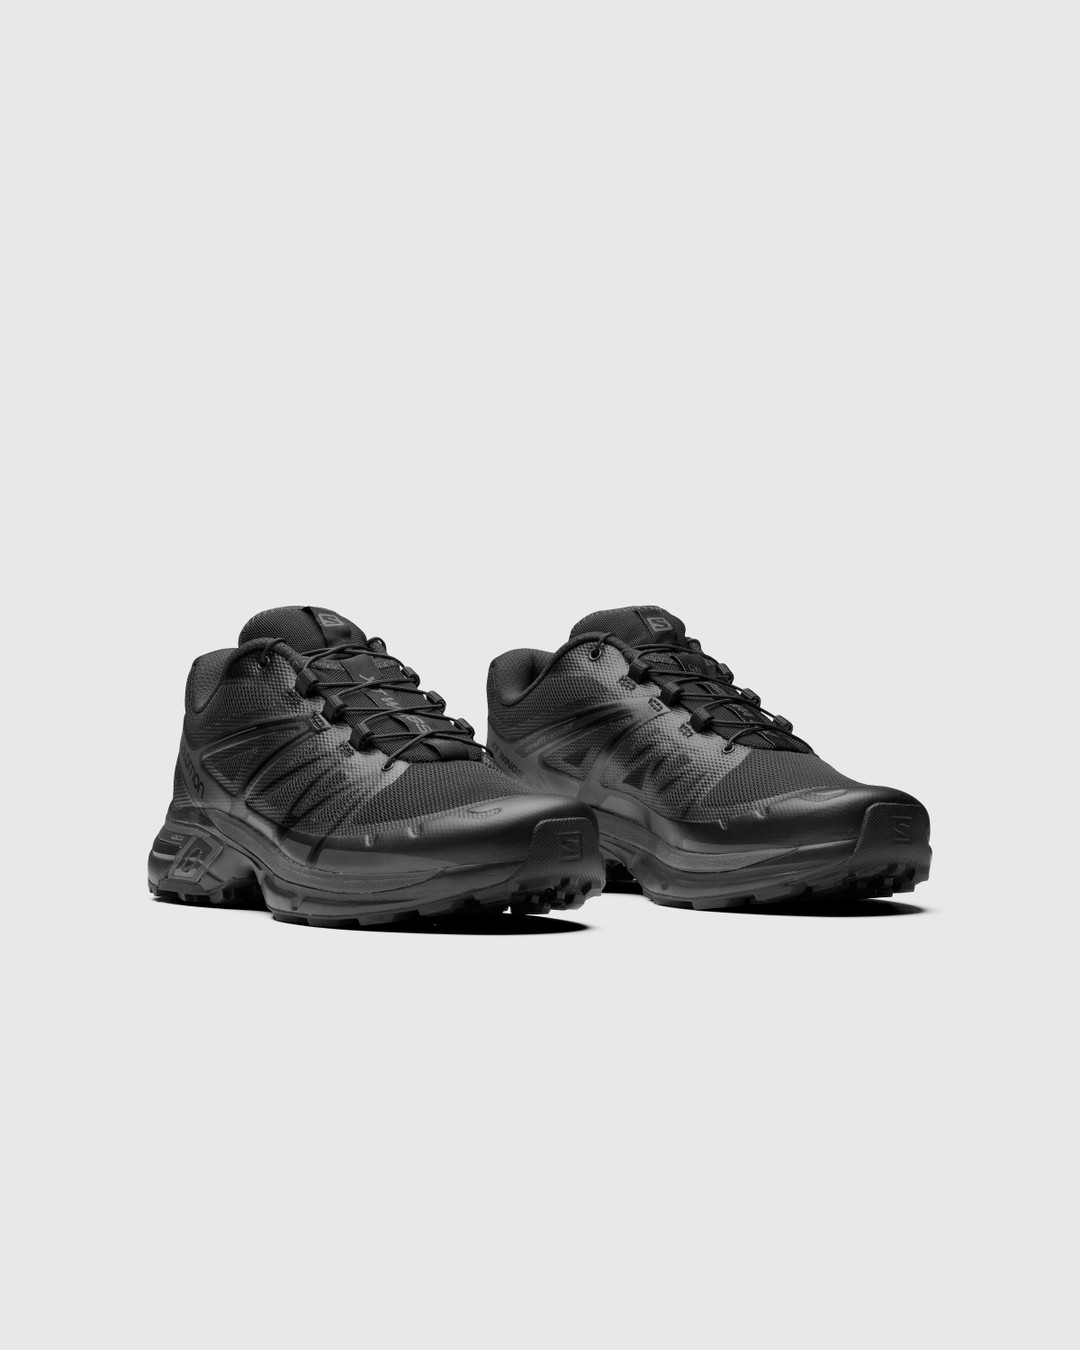 Salomon – XT-Wings 2 Advanced Black/Black/Magnet - Low Top Sneakers - Black - Image 2